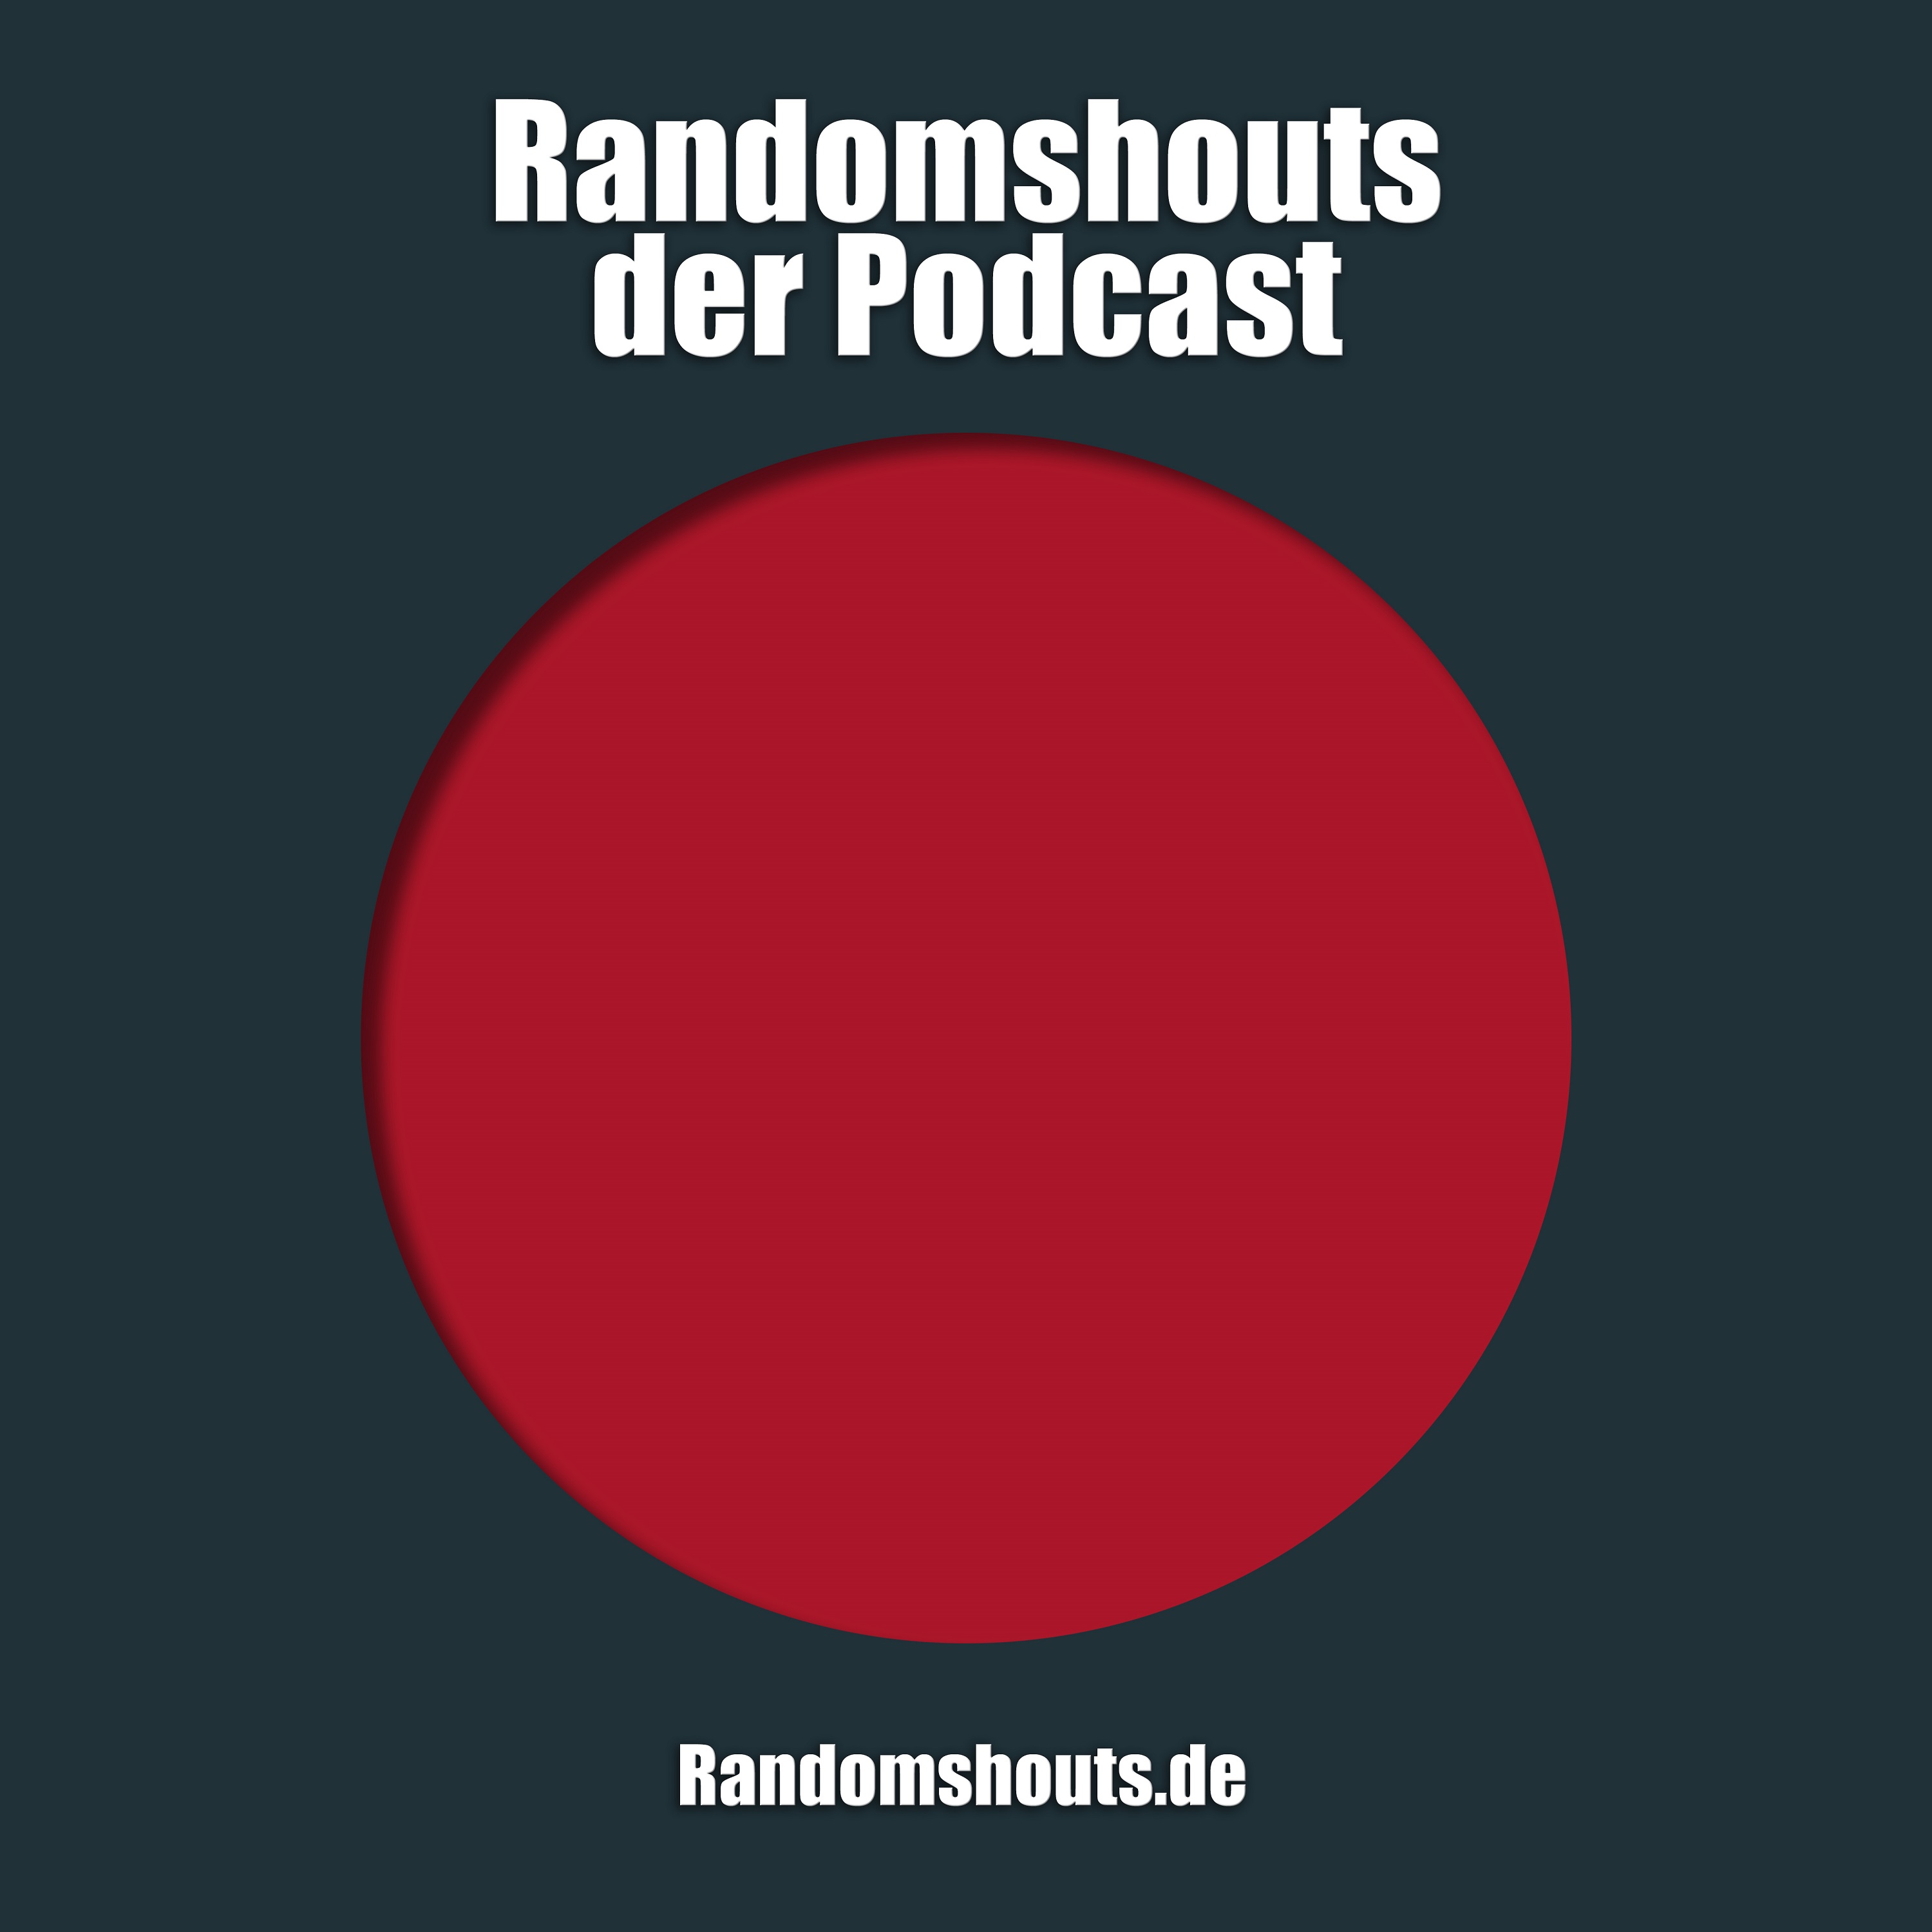 Randomshouts der Podcast - Episode 9: MAXimale Konversation